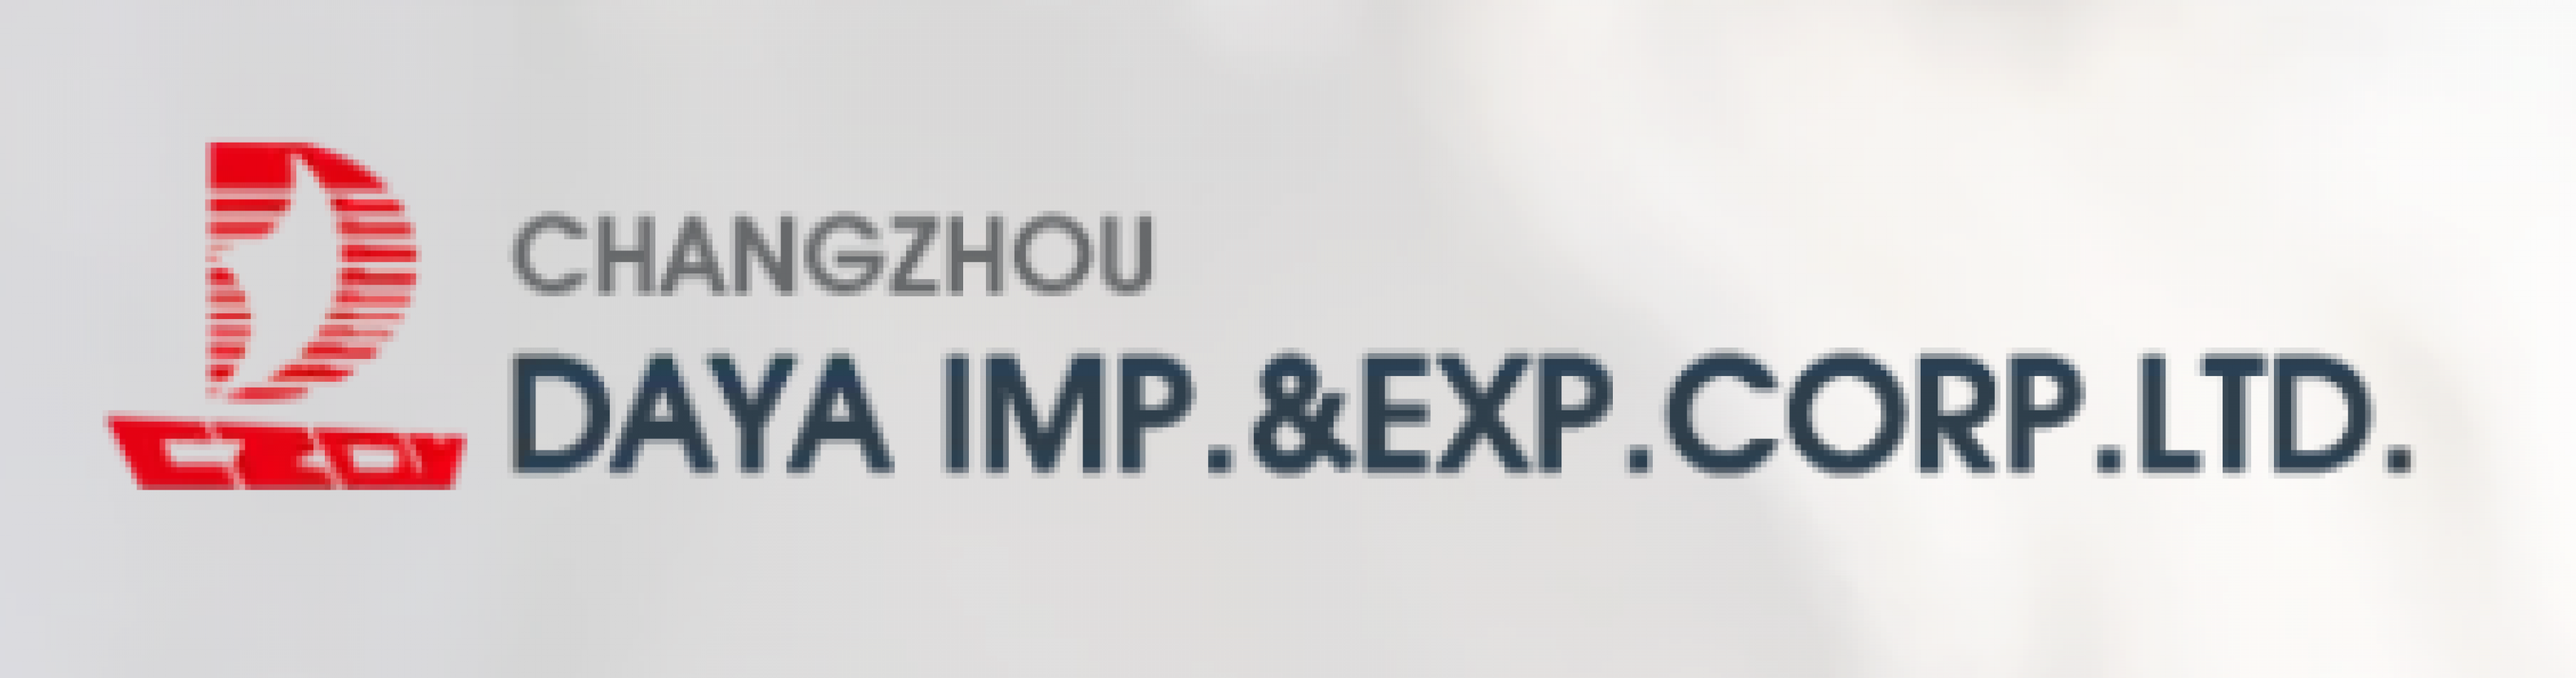 CHANGZHOU DAYA IMP. & EXP. CORP. Ltd.